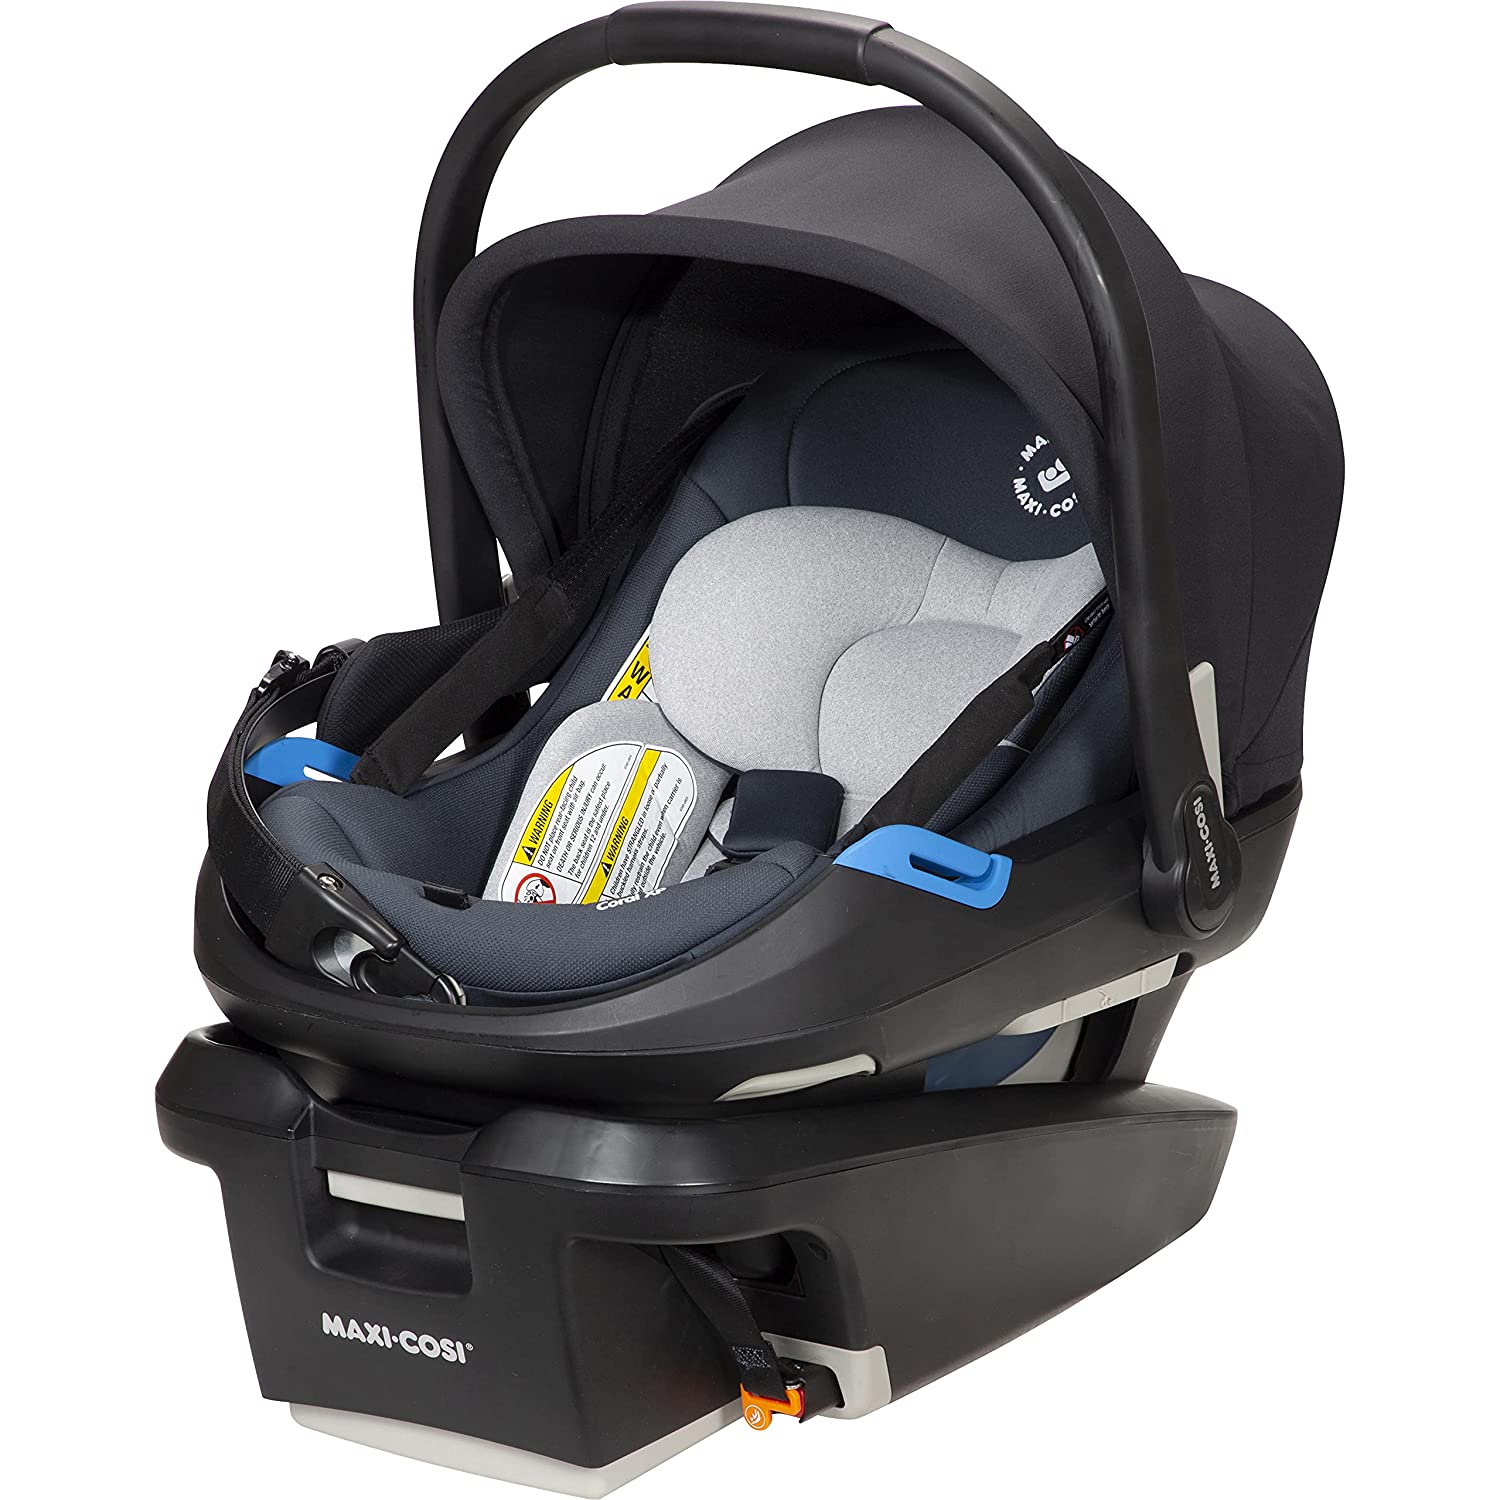 Maxi-Cosi Coral XP Infant Car Seat (Essential Graphite) $210 + free s/h at Amazon